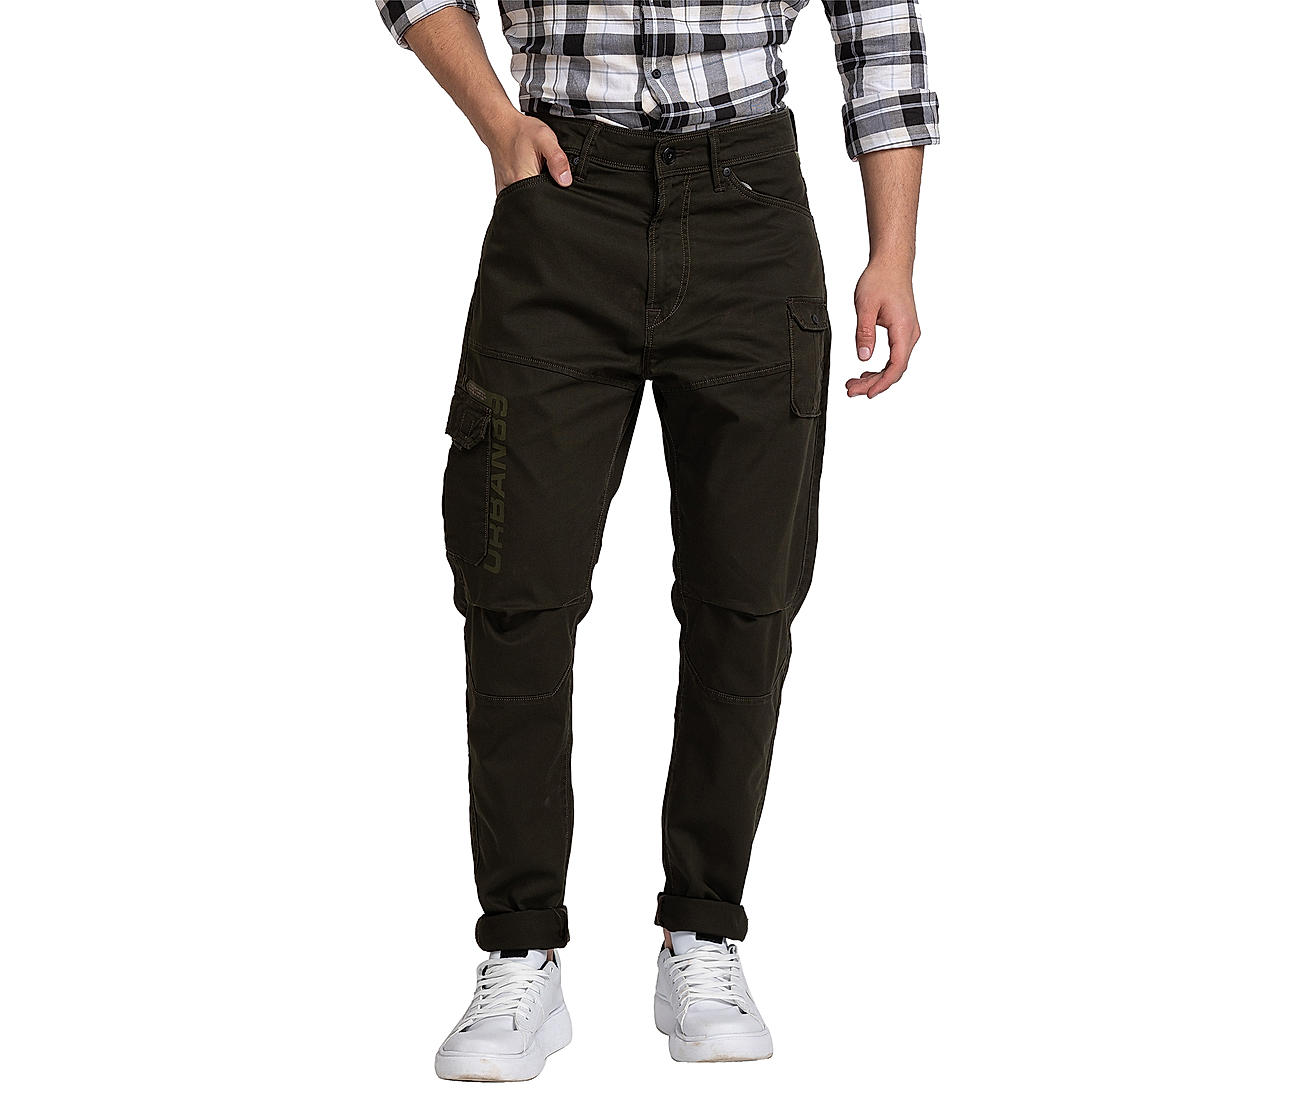 Buy Cargo Fit Dark Green Solid Cargo Jeans for Men Online at